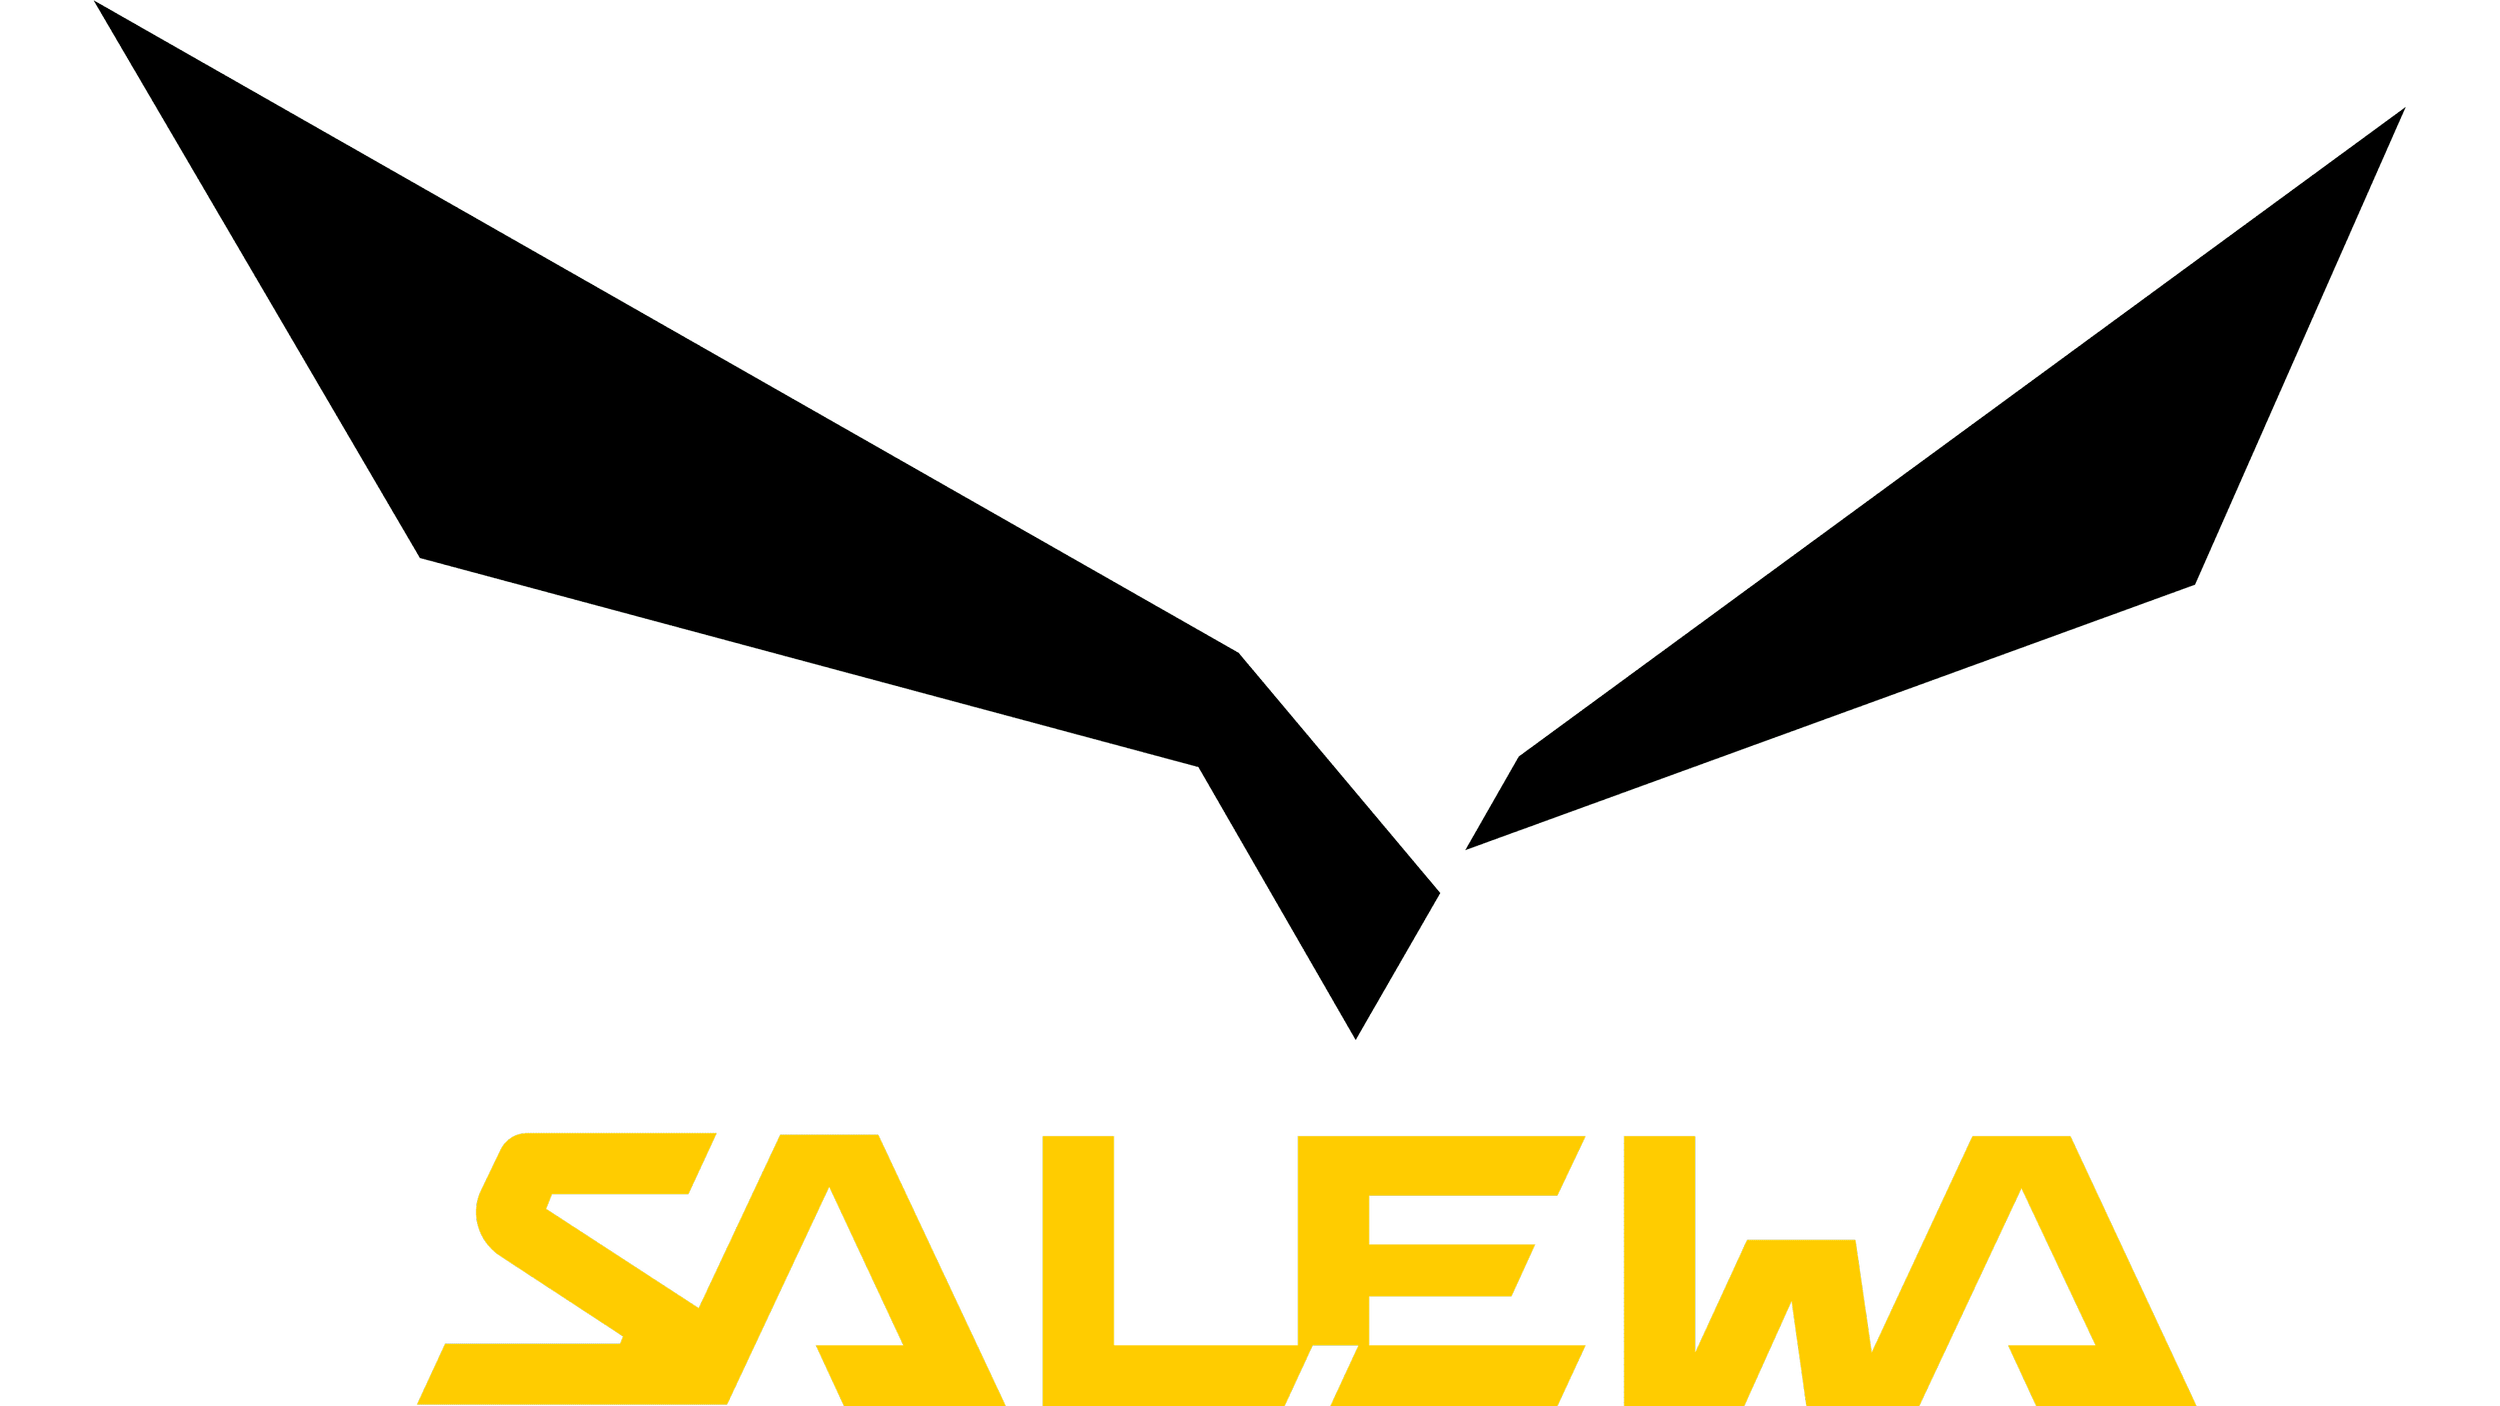 Salewa-logo preso dal web.png